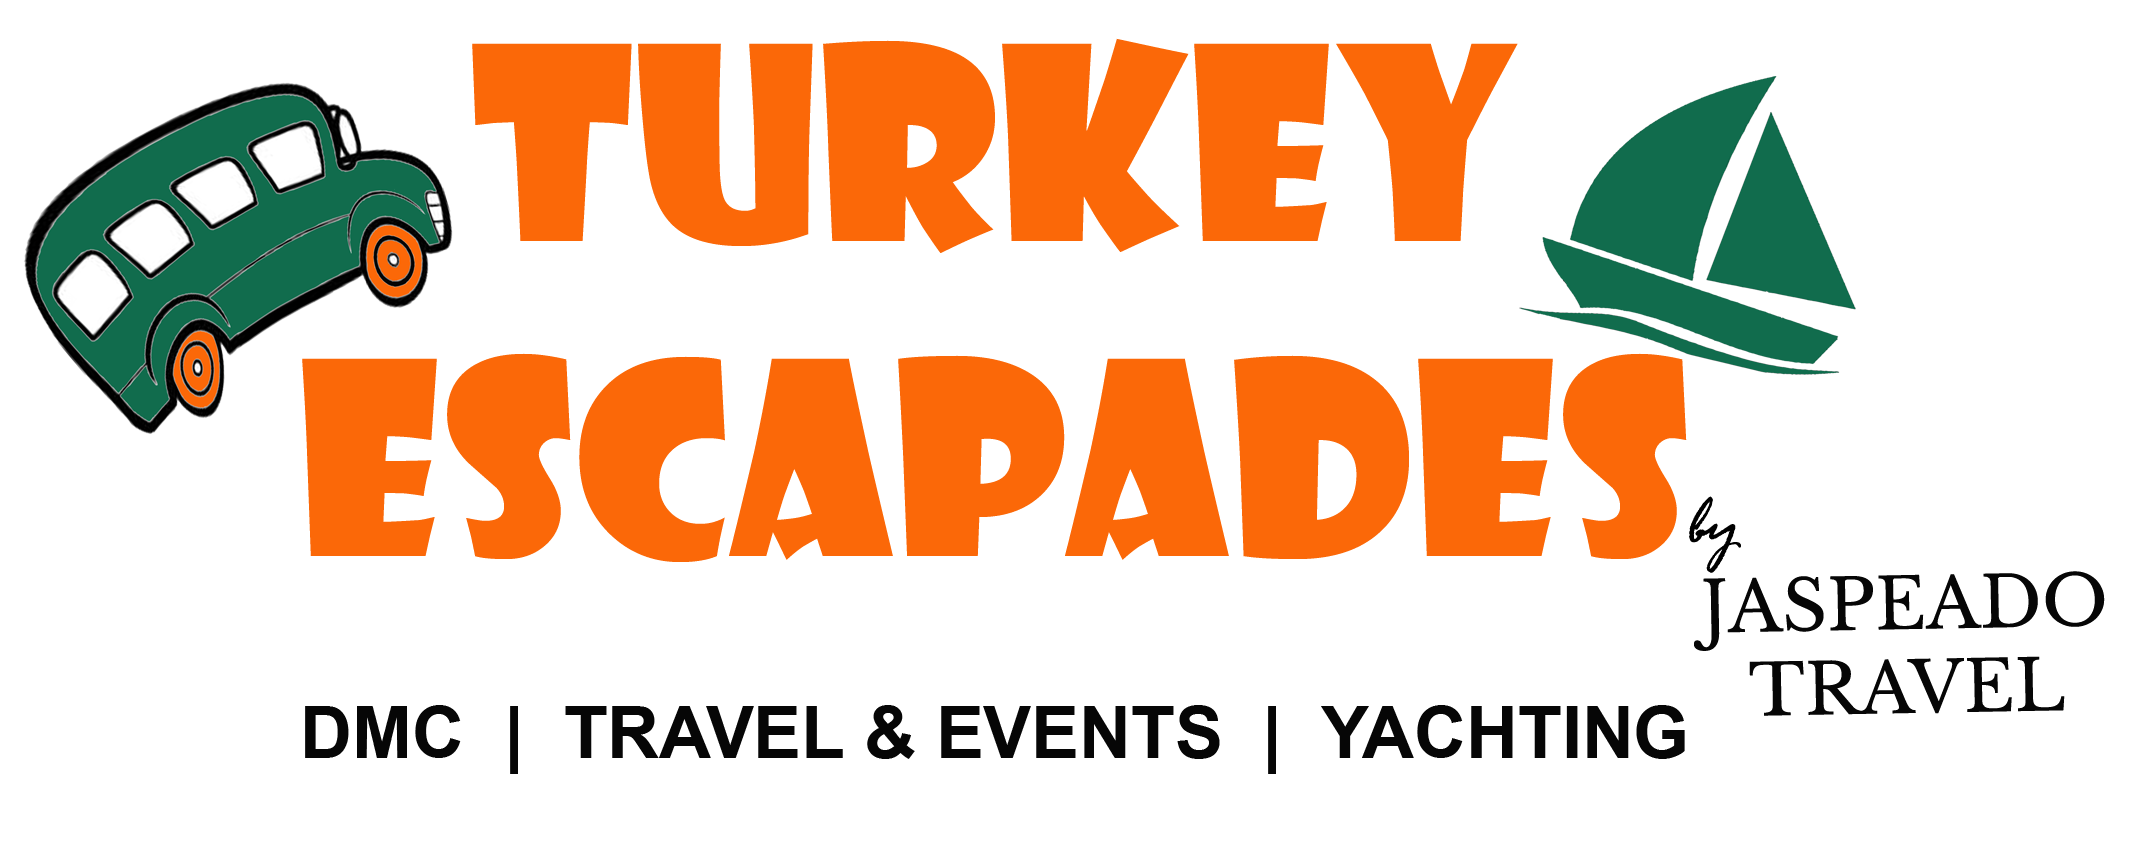 Turkey Escapades | Latest News - Turkey Escapades